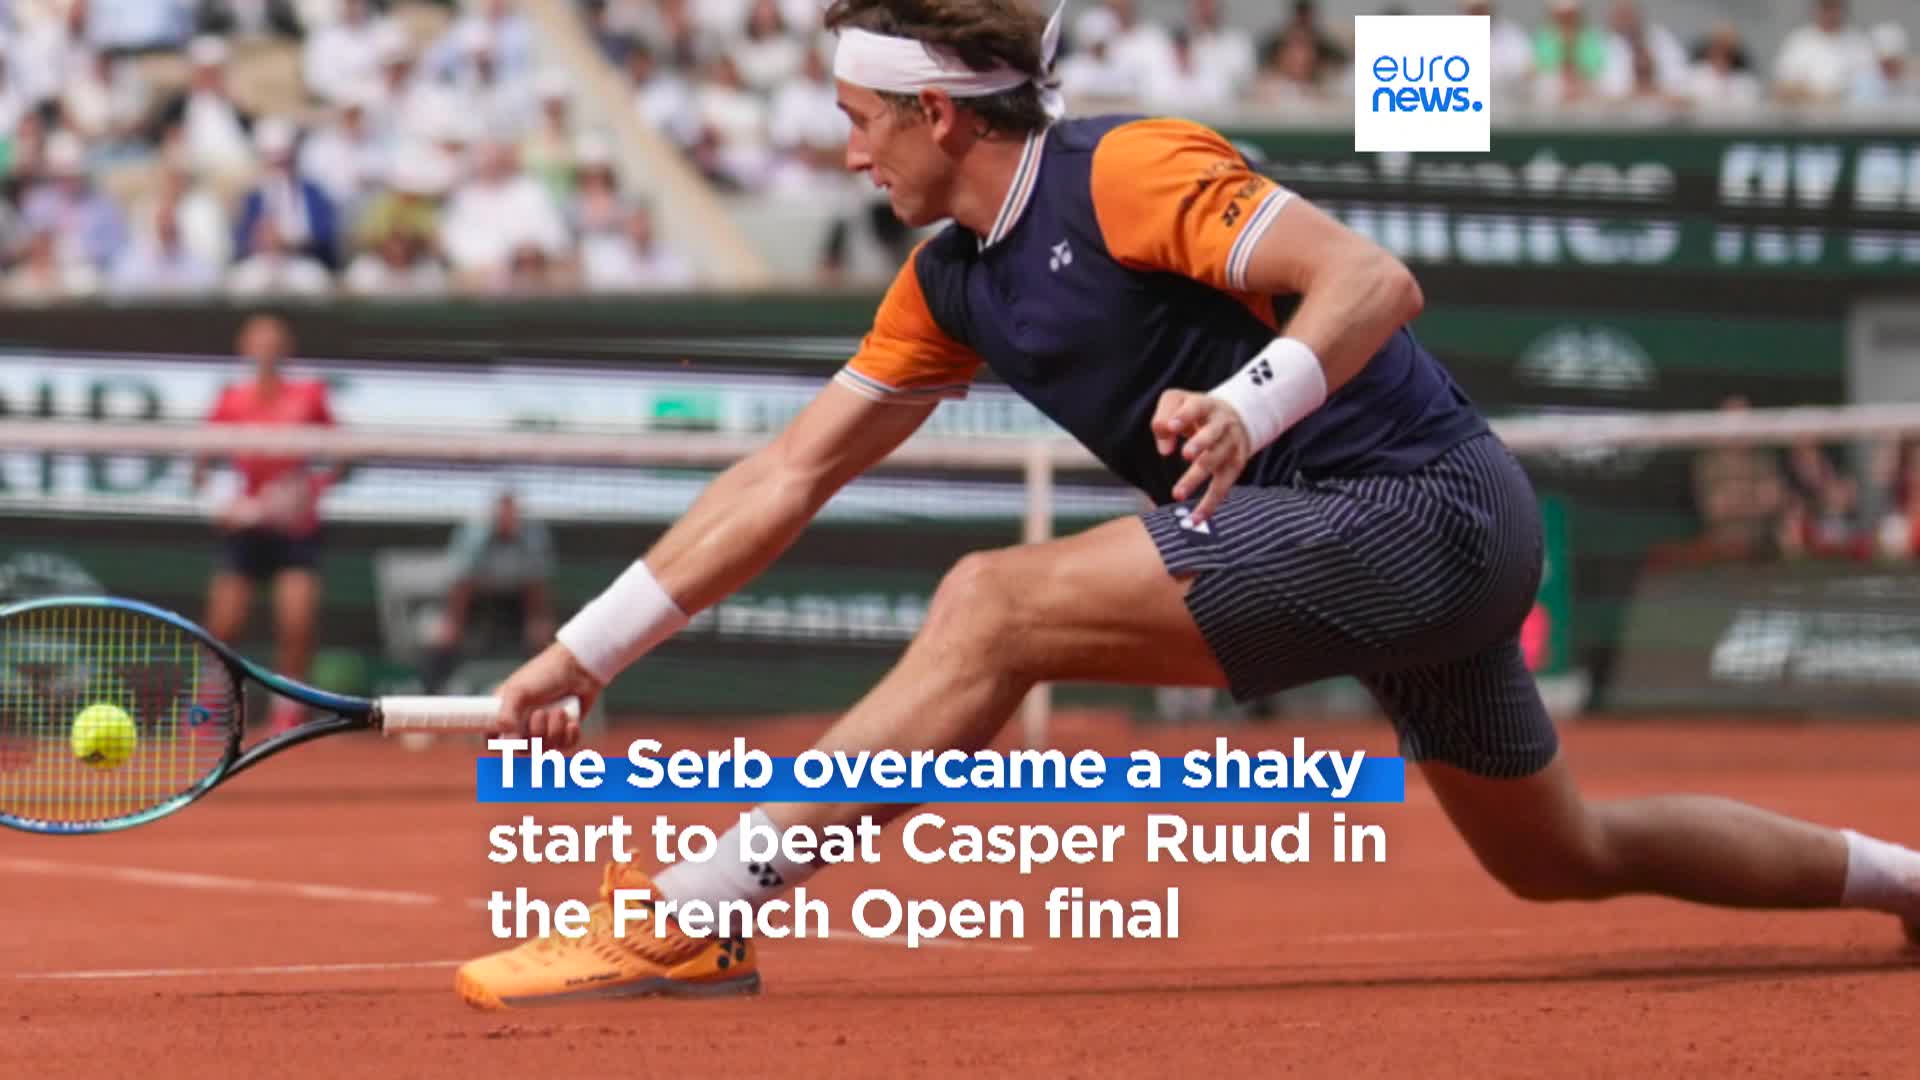 Roland Garros Novak Djokovic becomes first man to win 23 Grand Slam titles